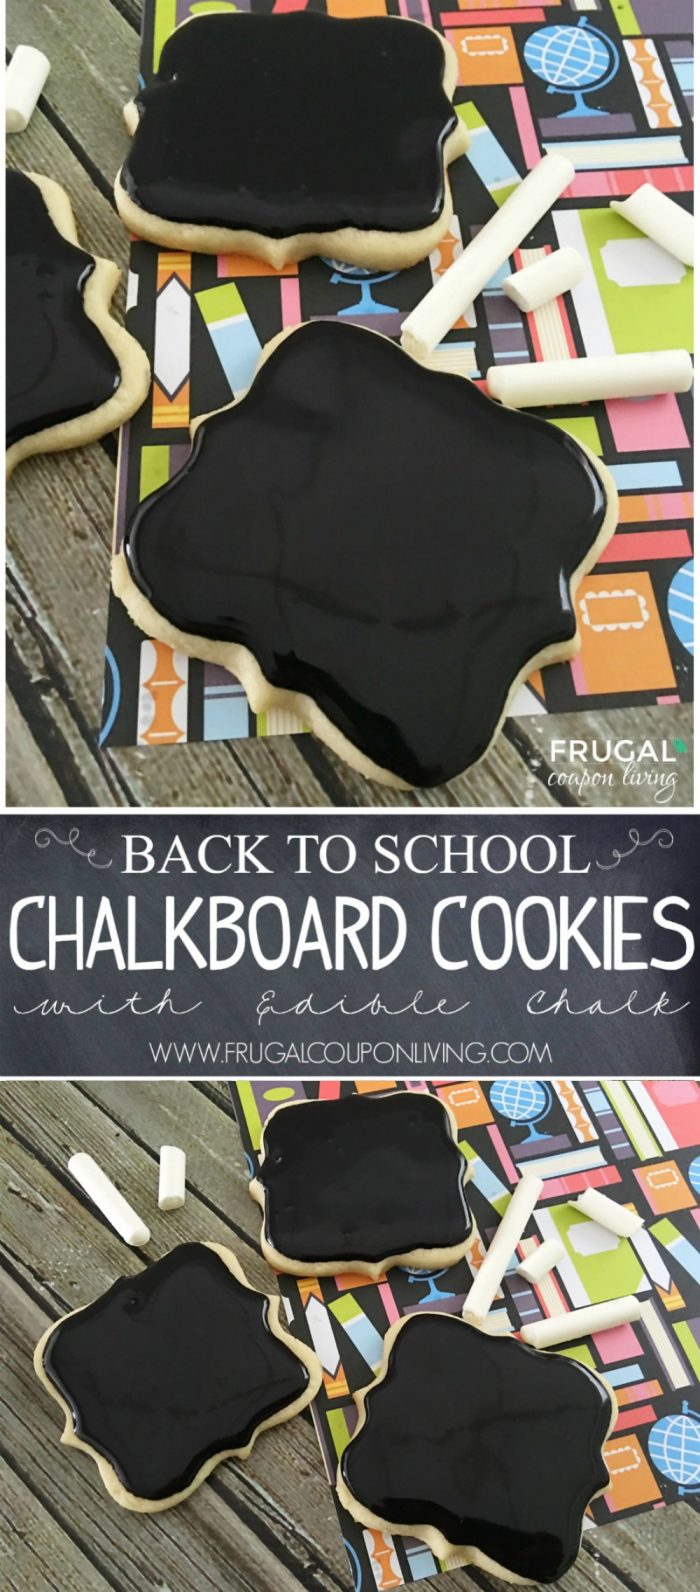 Chalkboard-cookies-frugal-coupon-living-vertical-shorter